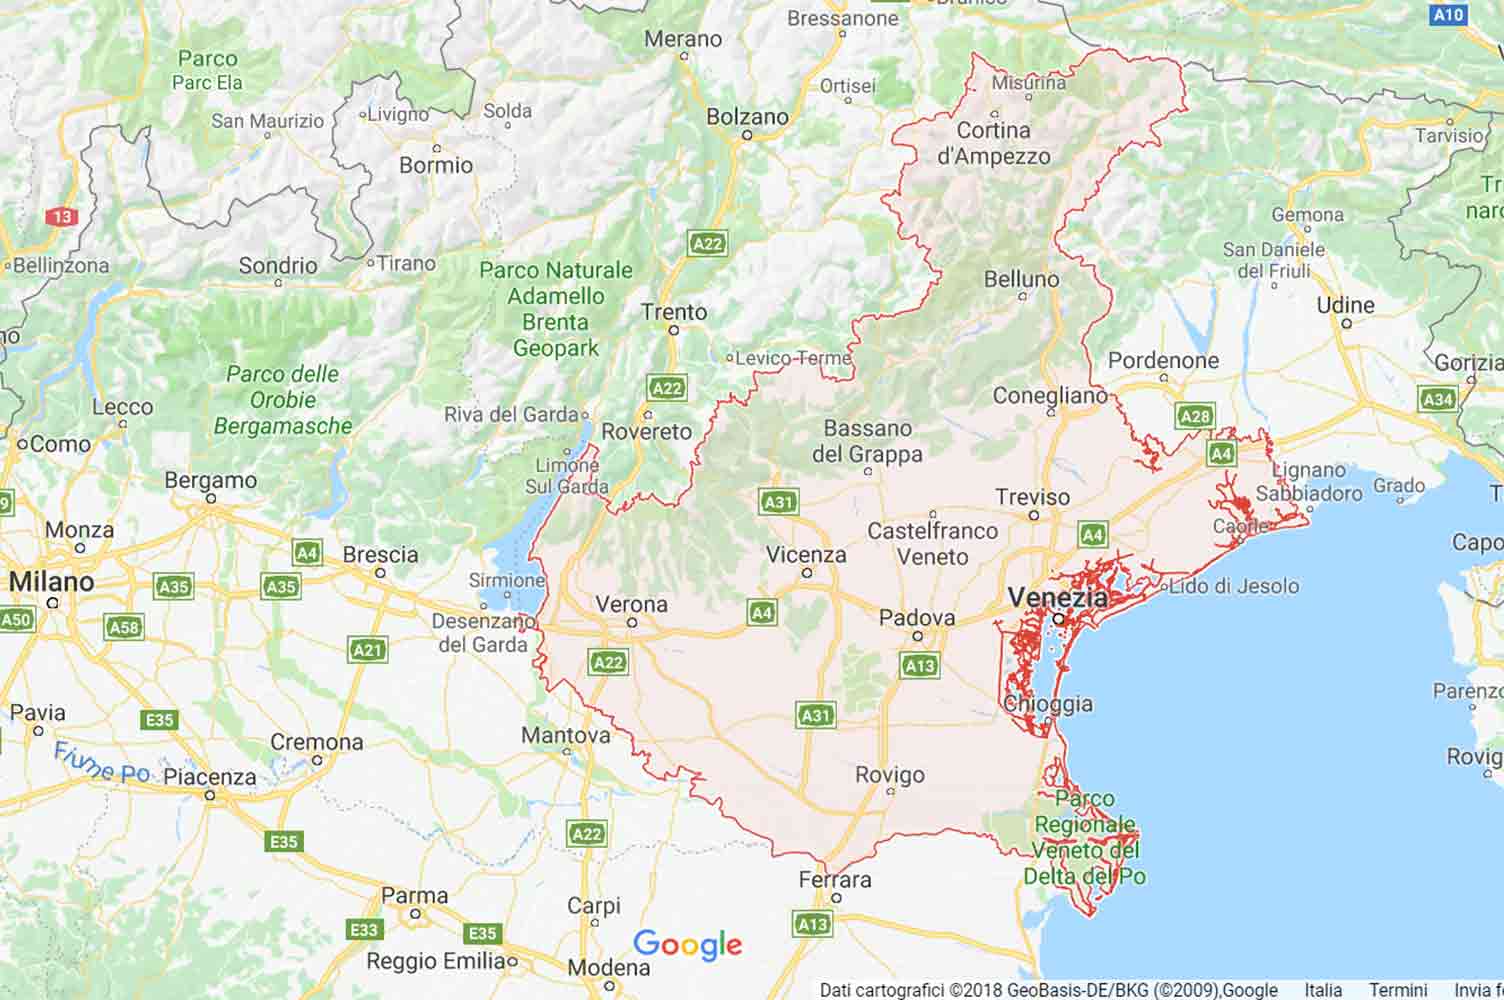 Veneto - Padova - Saonara Preventivi Veloci google maps